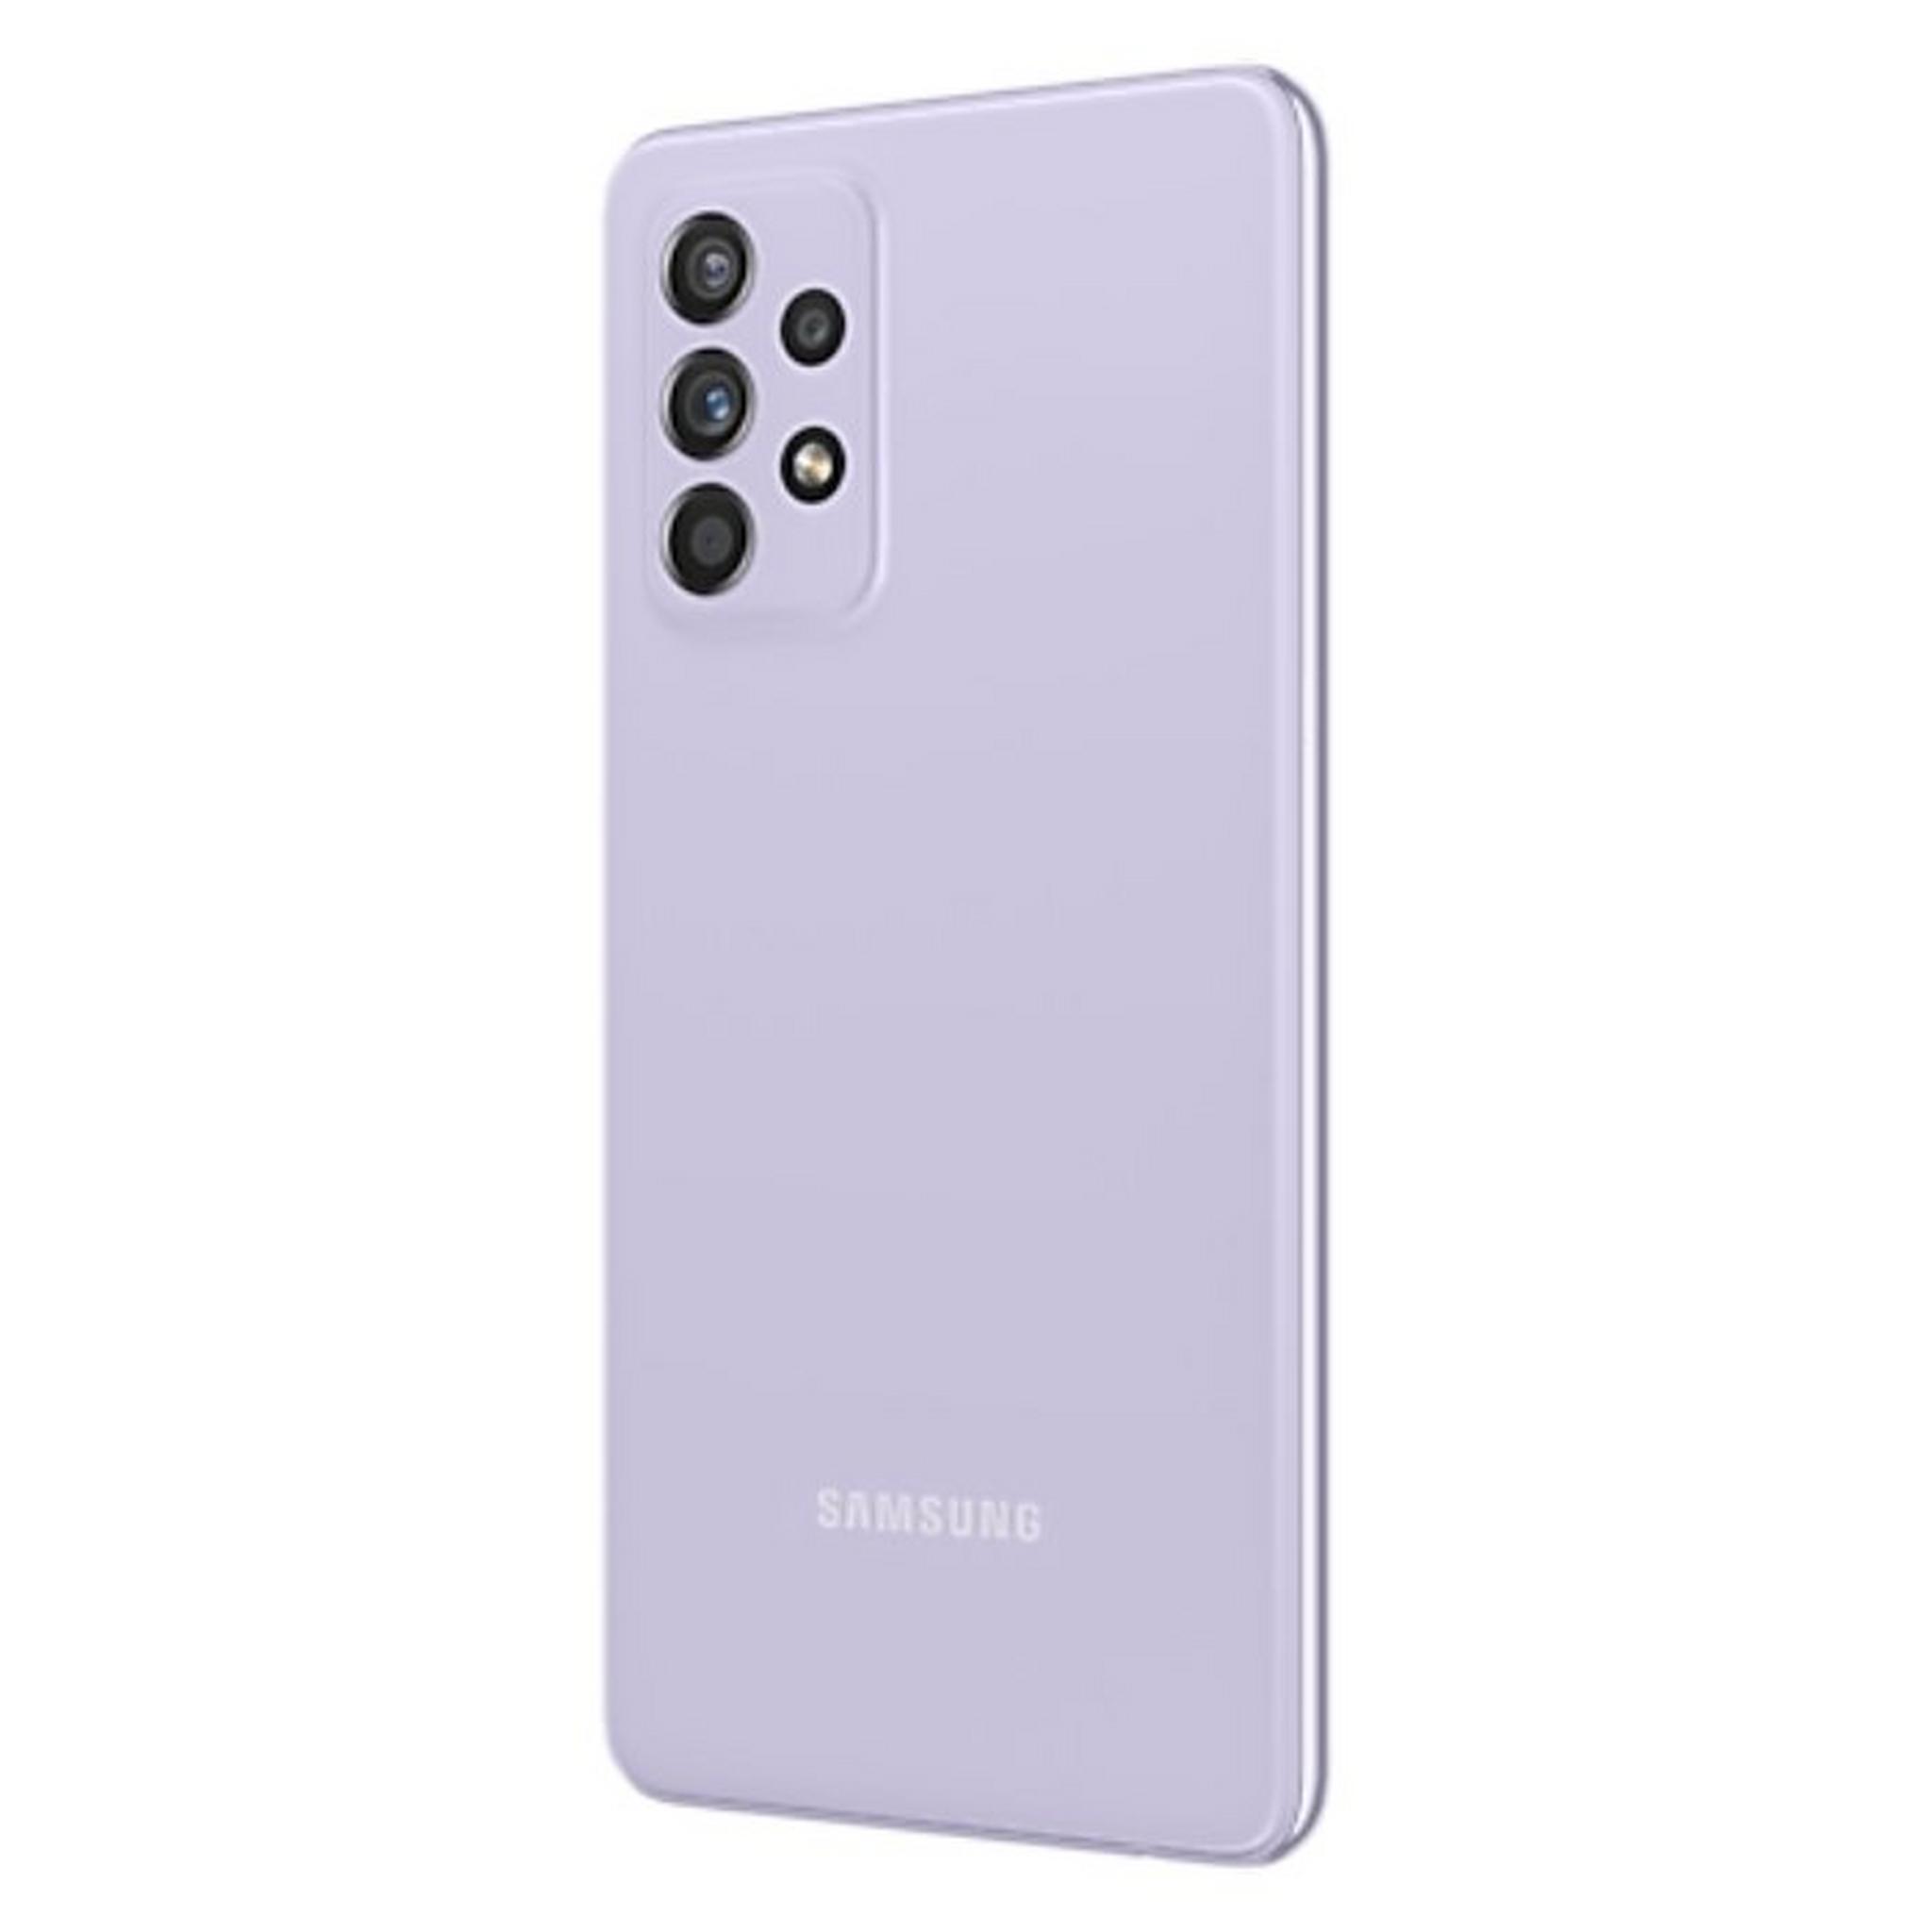 Samsung Galaxy A52 128GB Phone - Awesome Violet